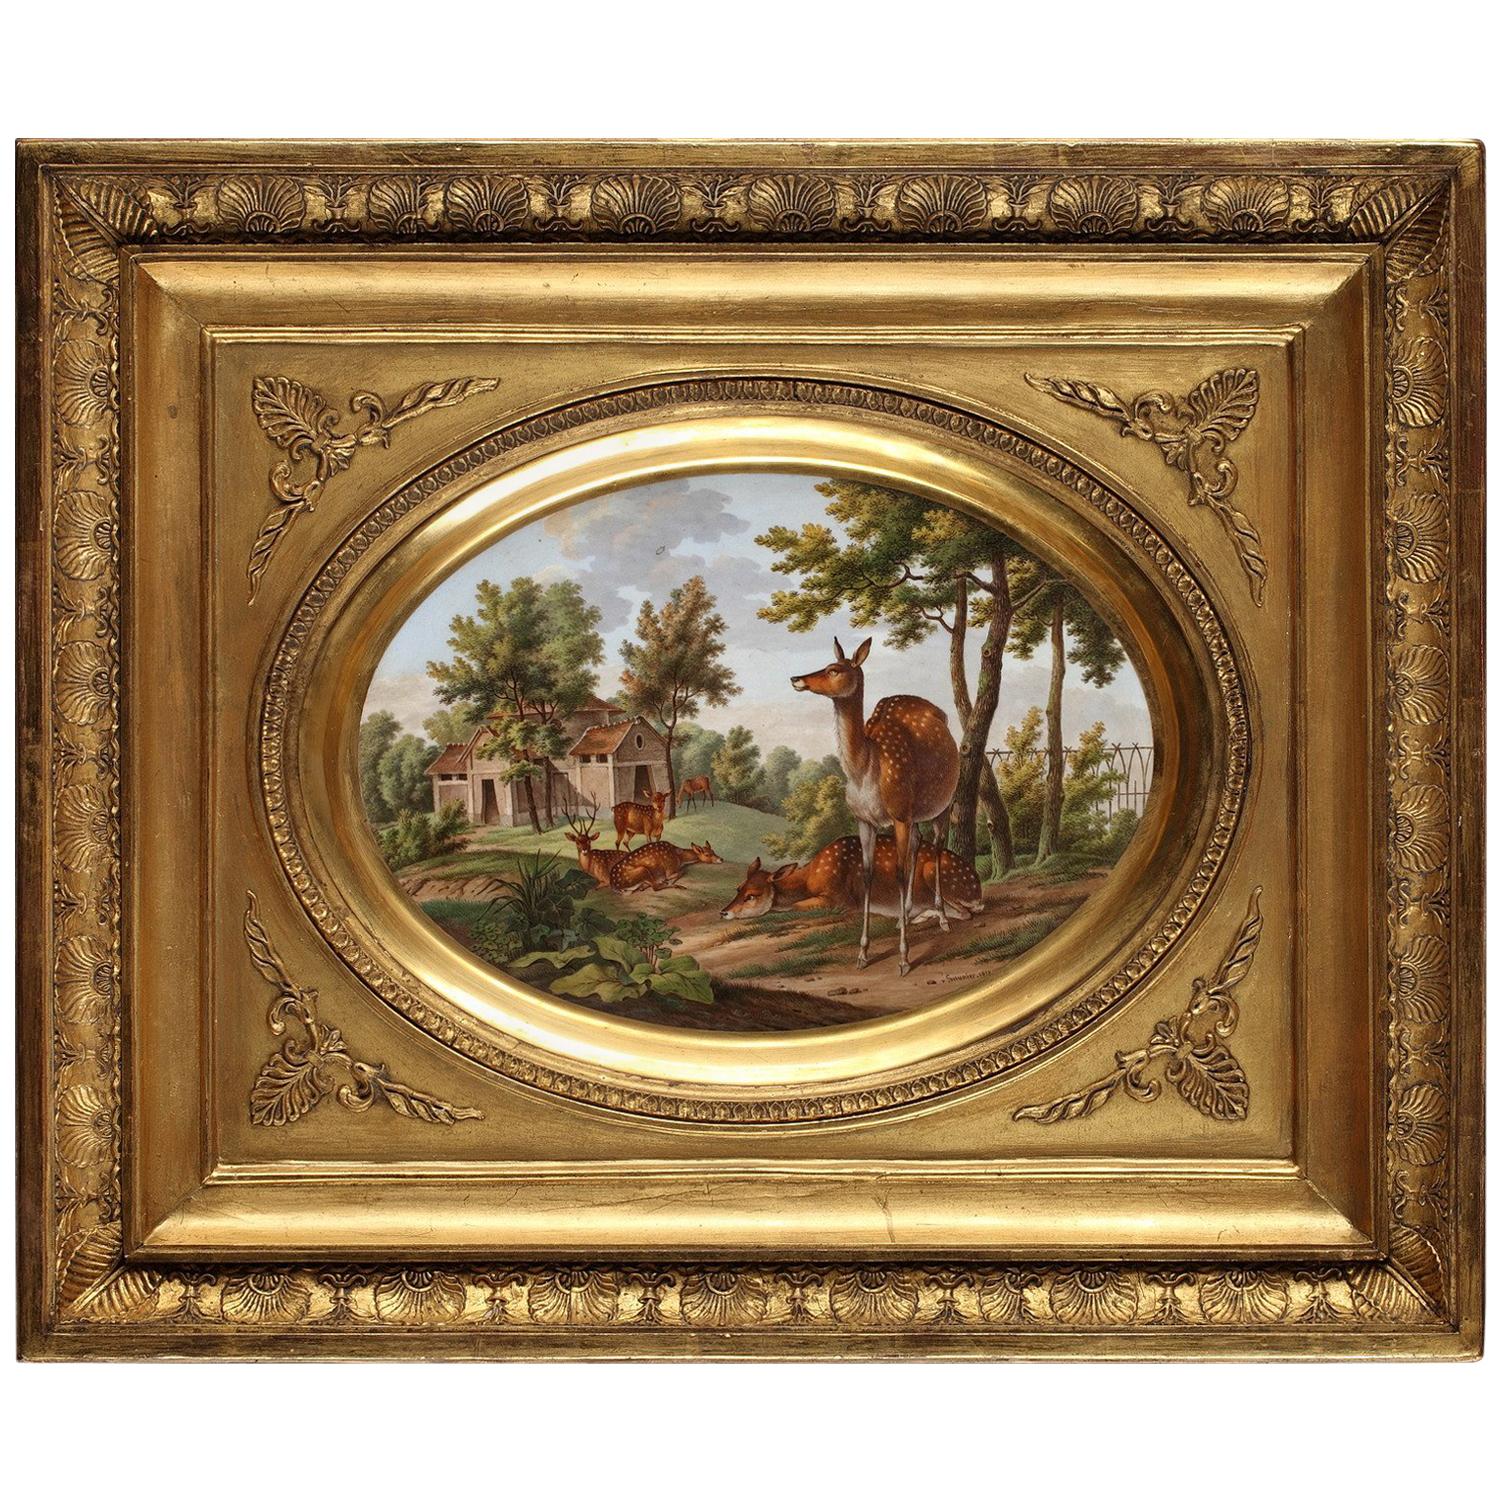 Charming Paris Porcelain "Deers in a Landscape" by Saunier, French School, 1819